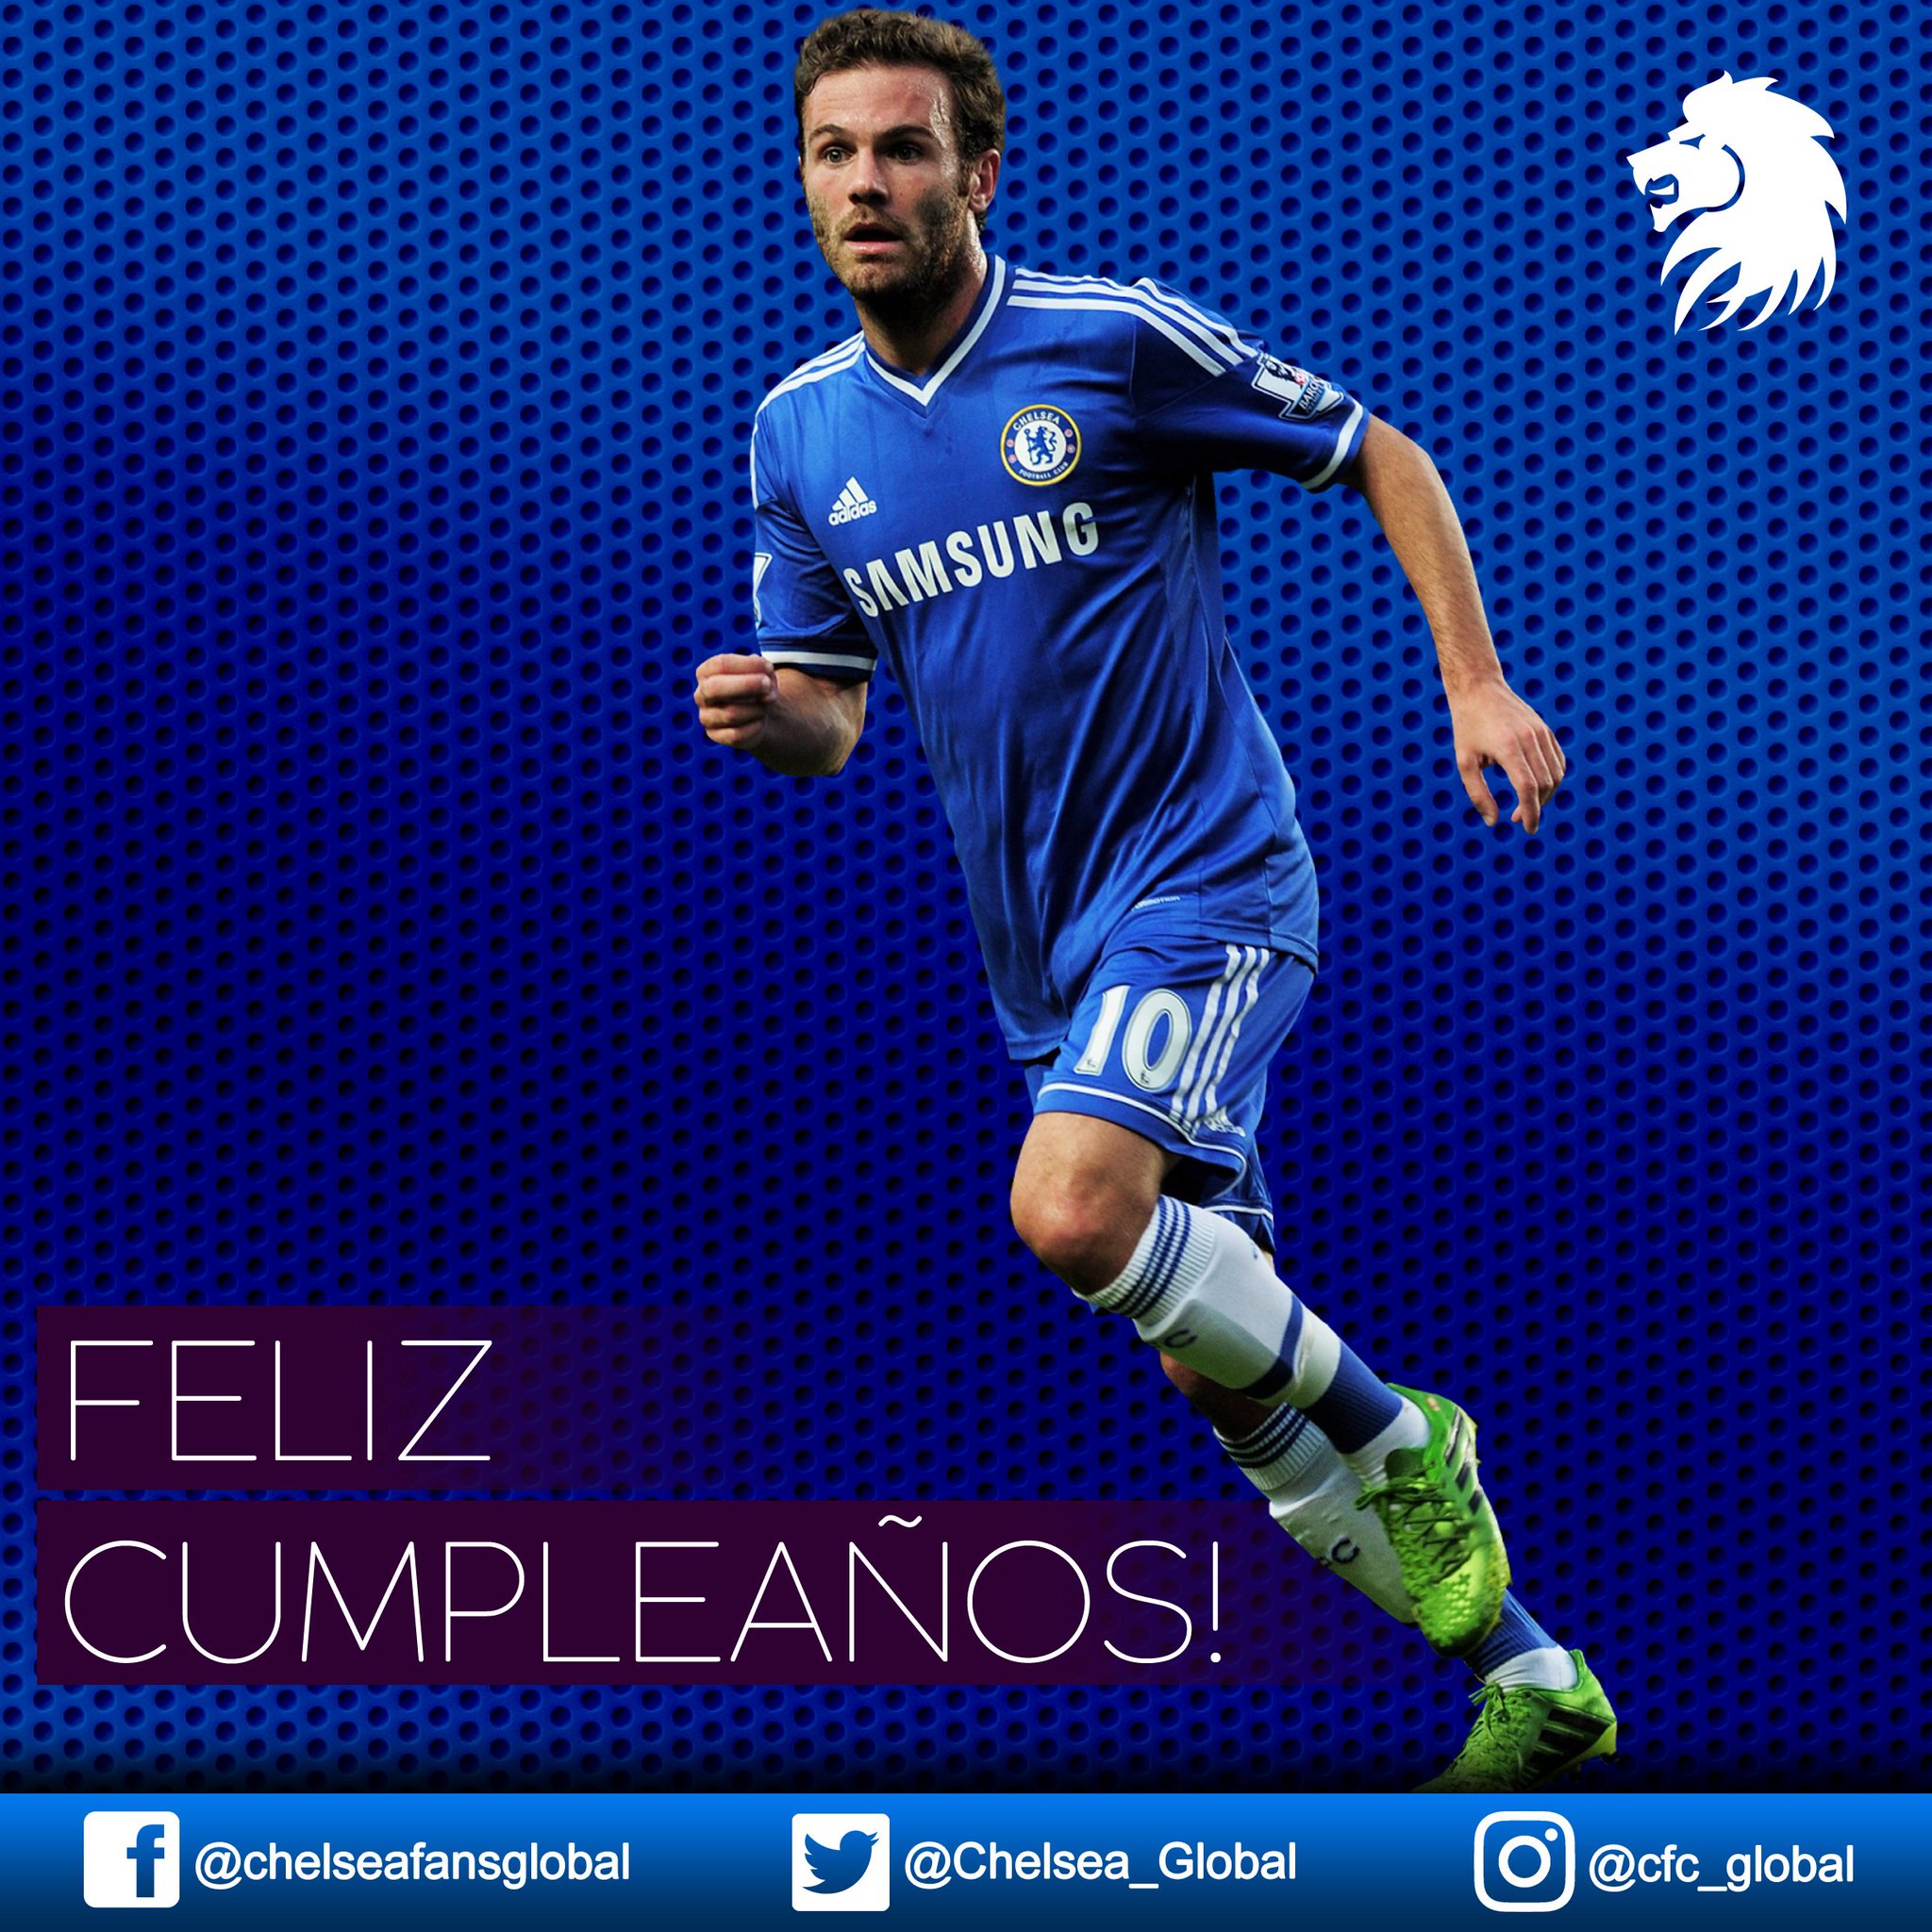 Today we say Happy Birthday to Juan   